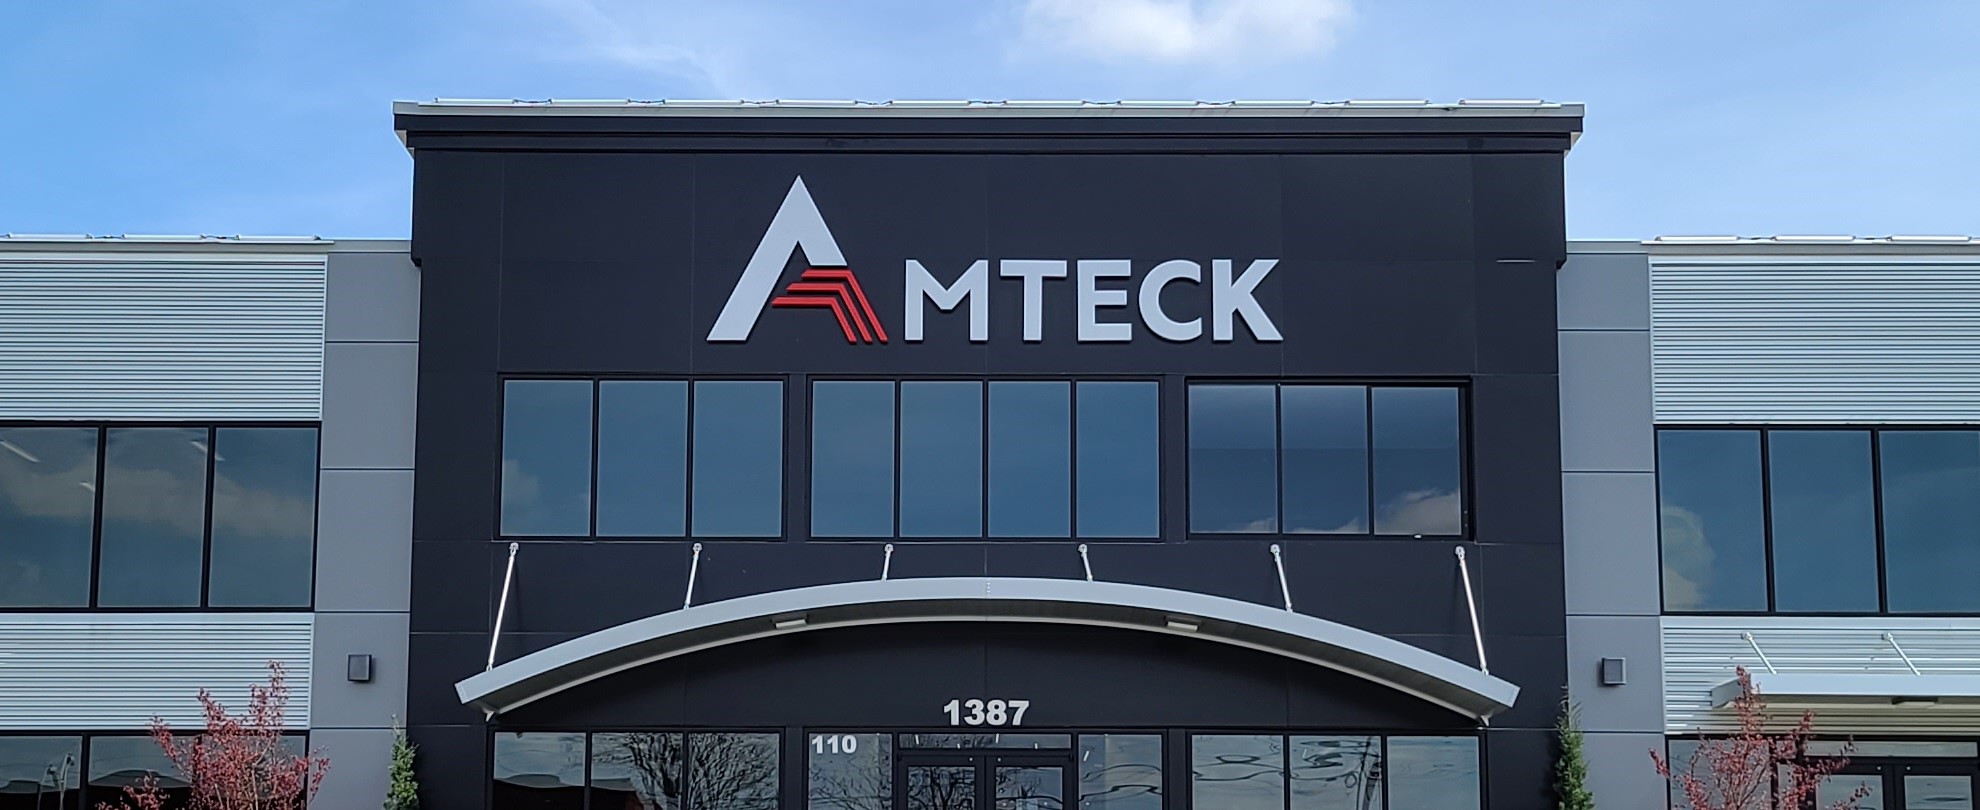 Amteck Headquarters Building